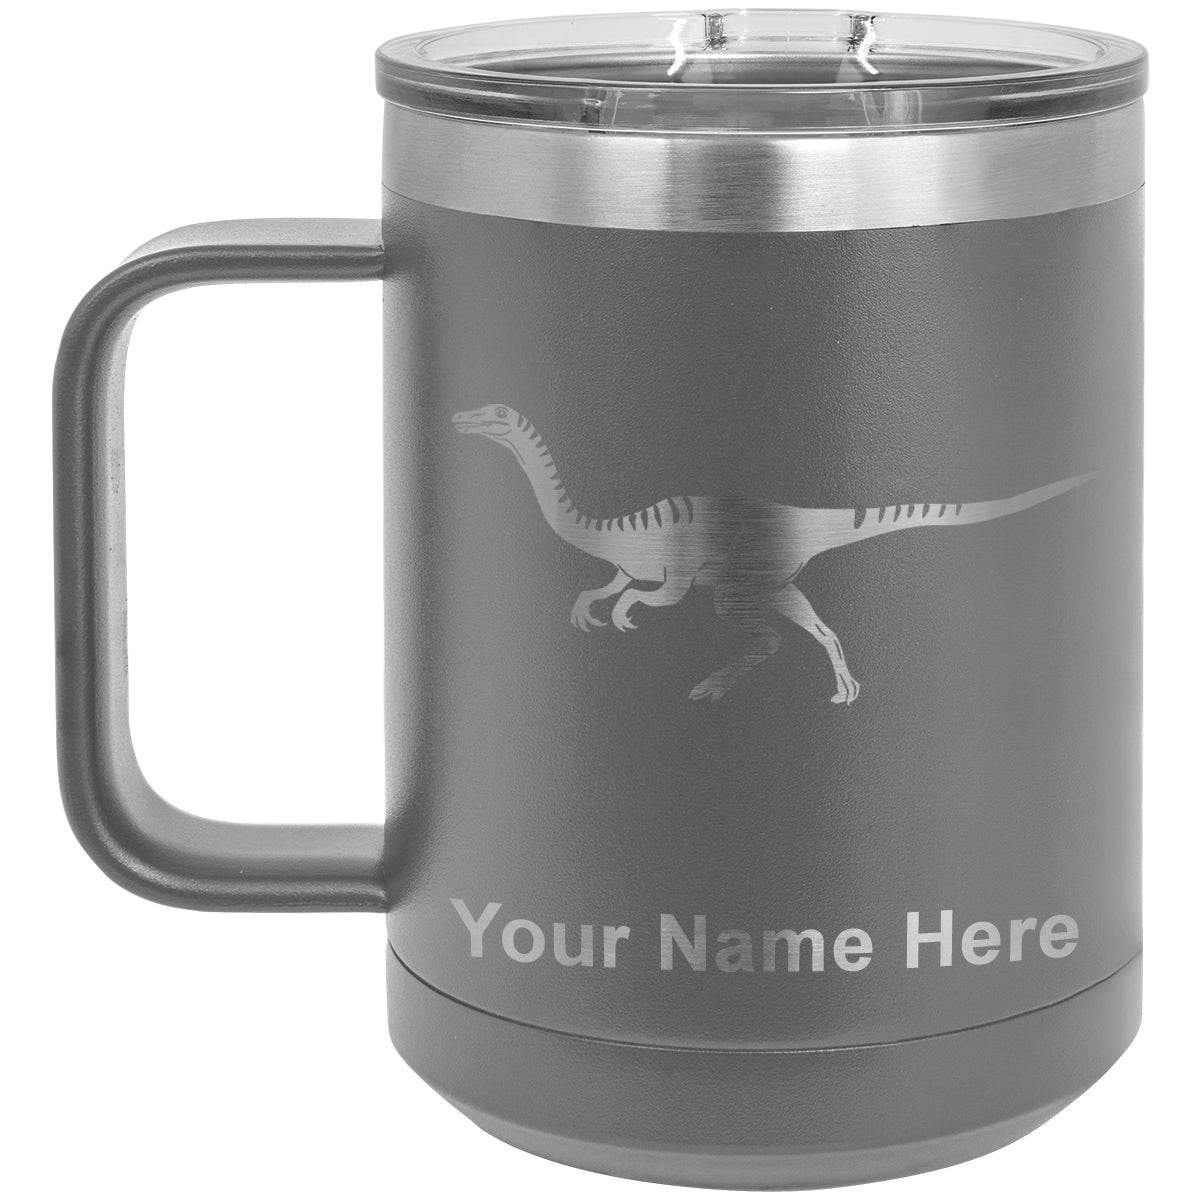 15oz Vacuum Insulated Coffee Mug, Gallimimus Dinosaur, Personalized Engraving Included